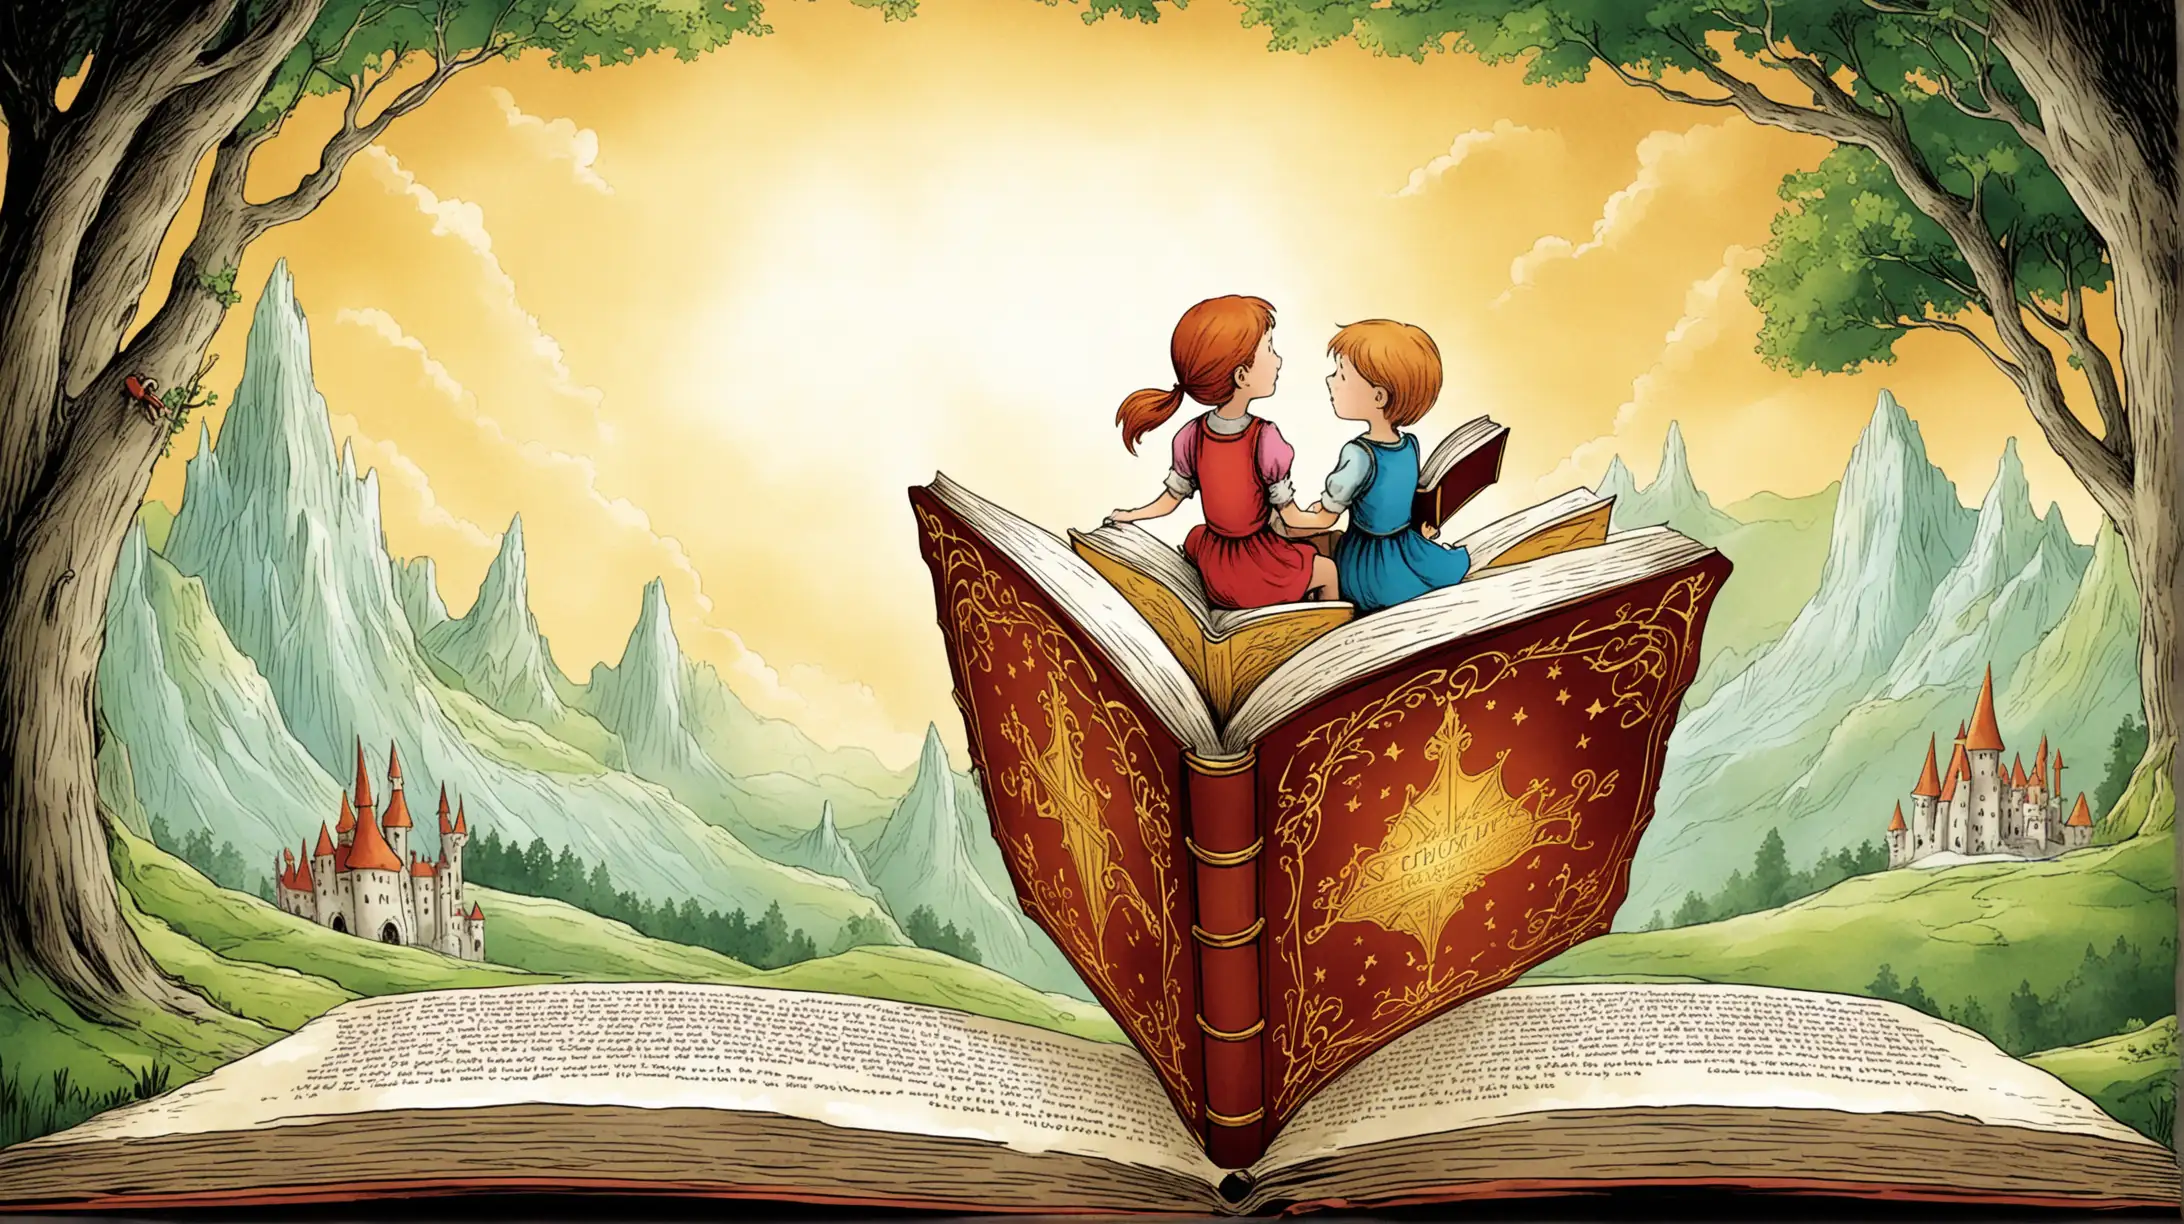 Children Riding Fairytale Book Adventure Magical Journey Illustration